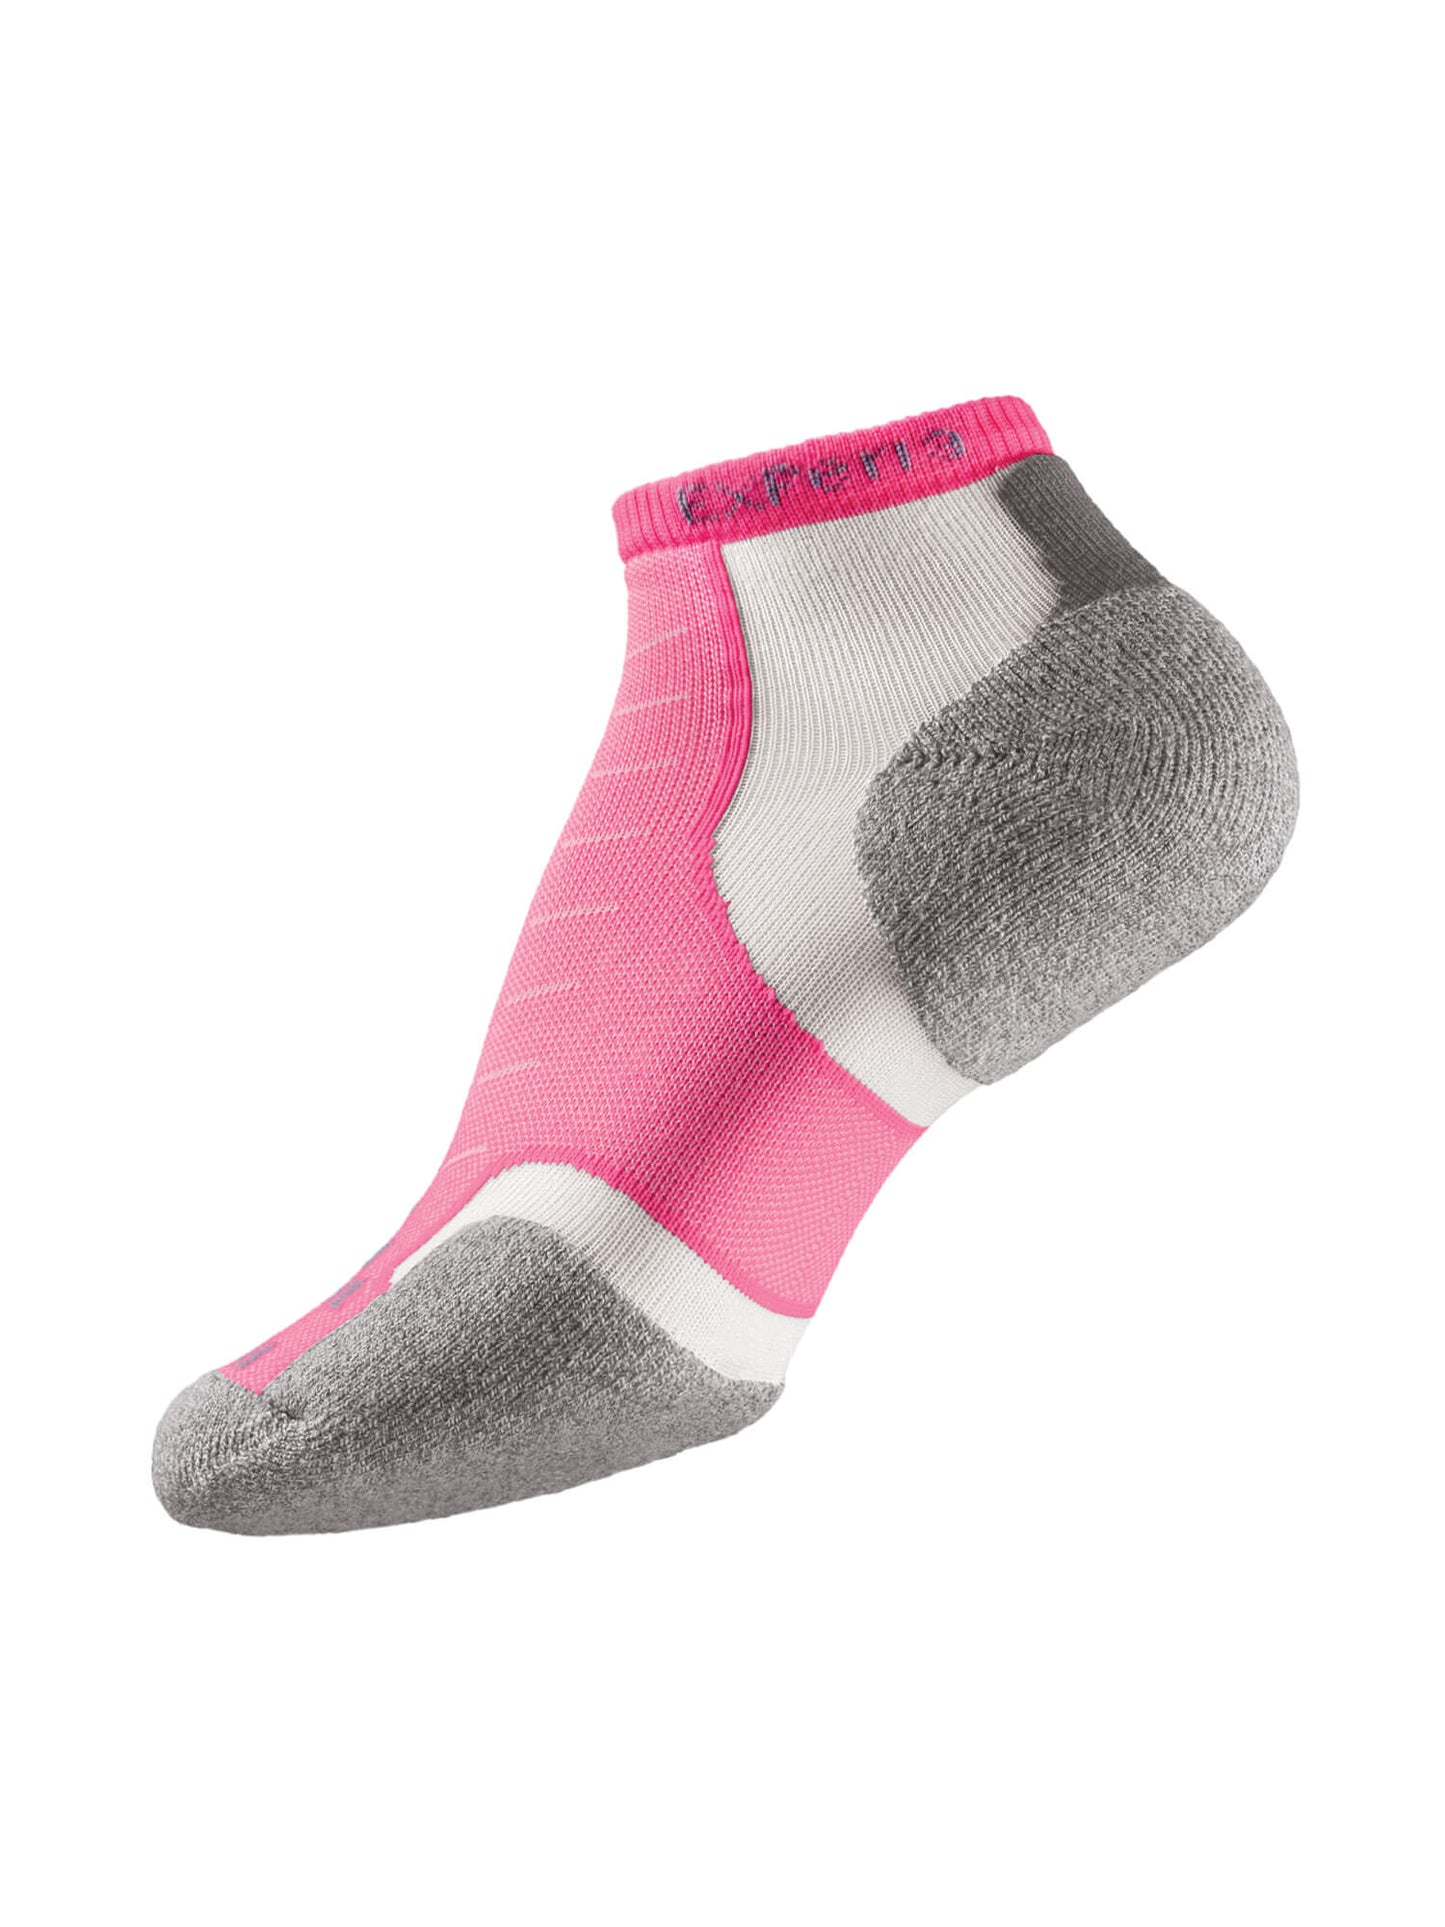 Pink and grey Thorlos Experia Coolmax Micro Mini Padded Socks